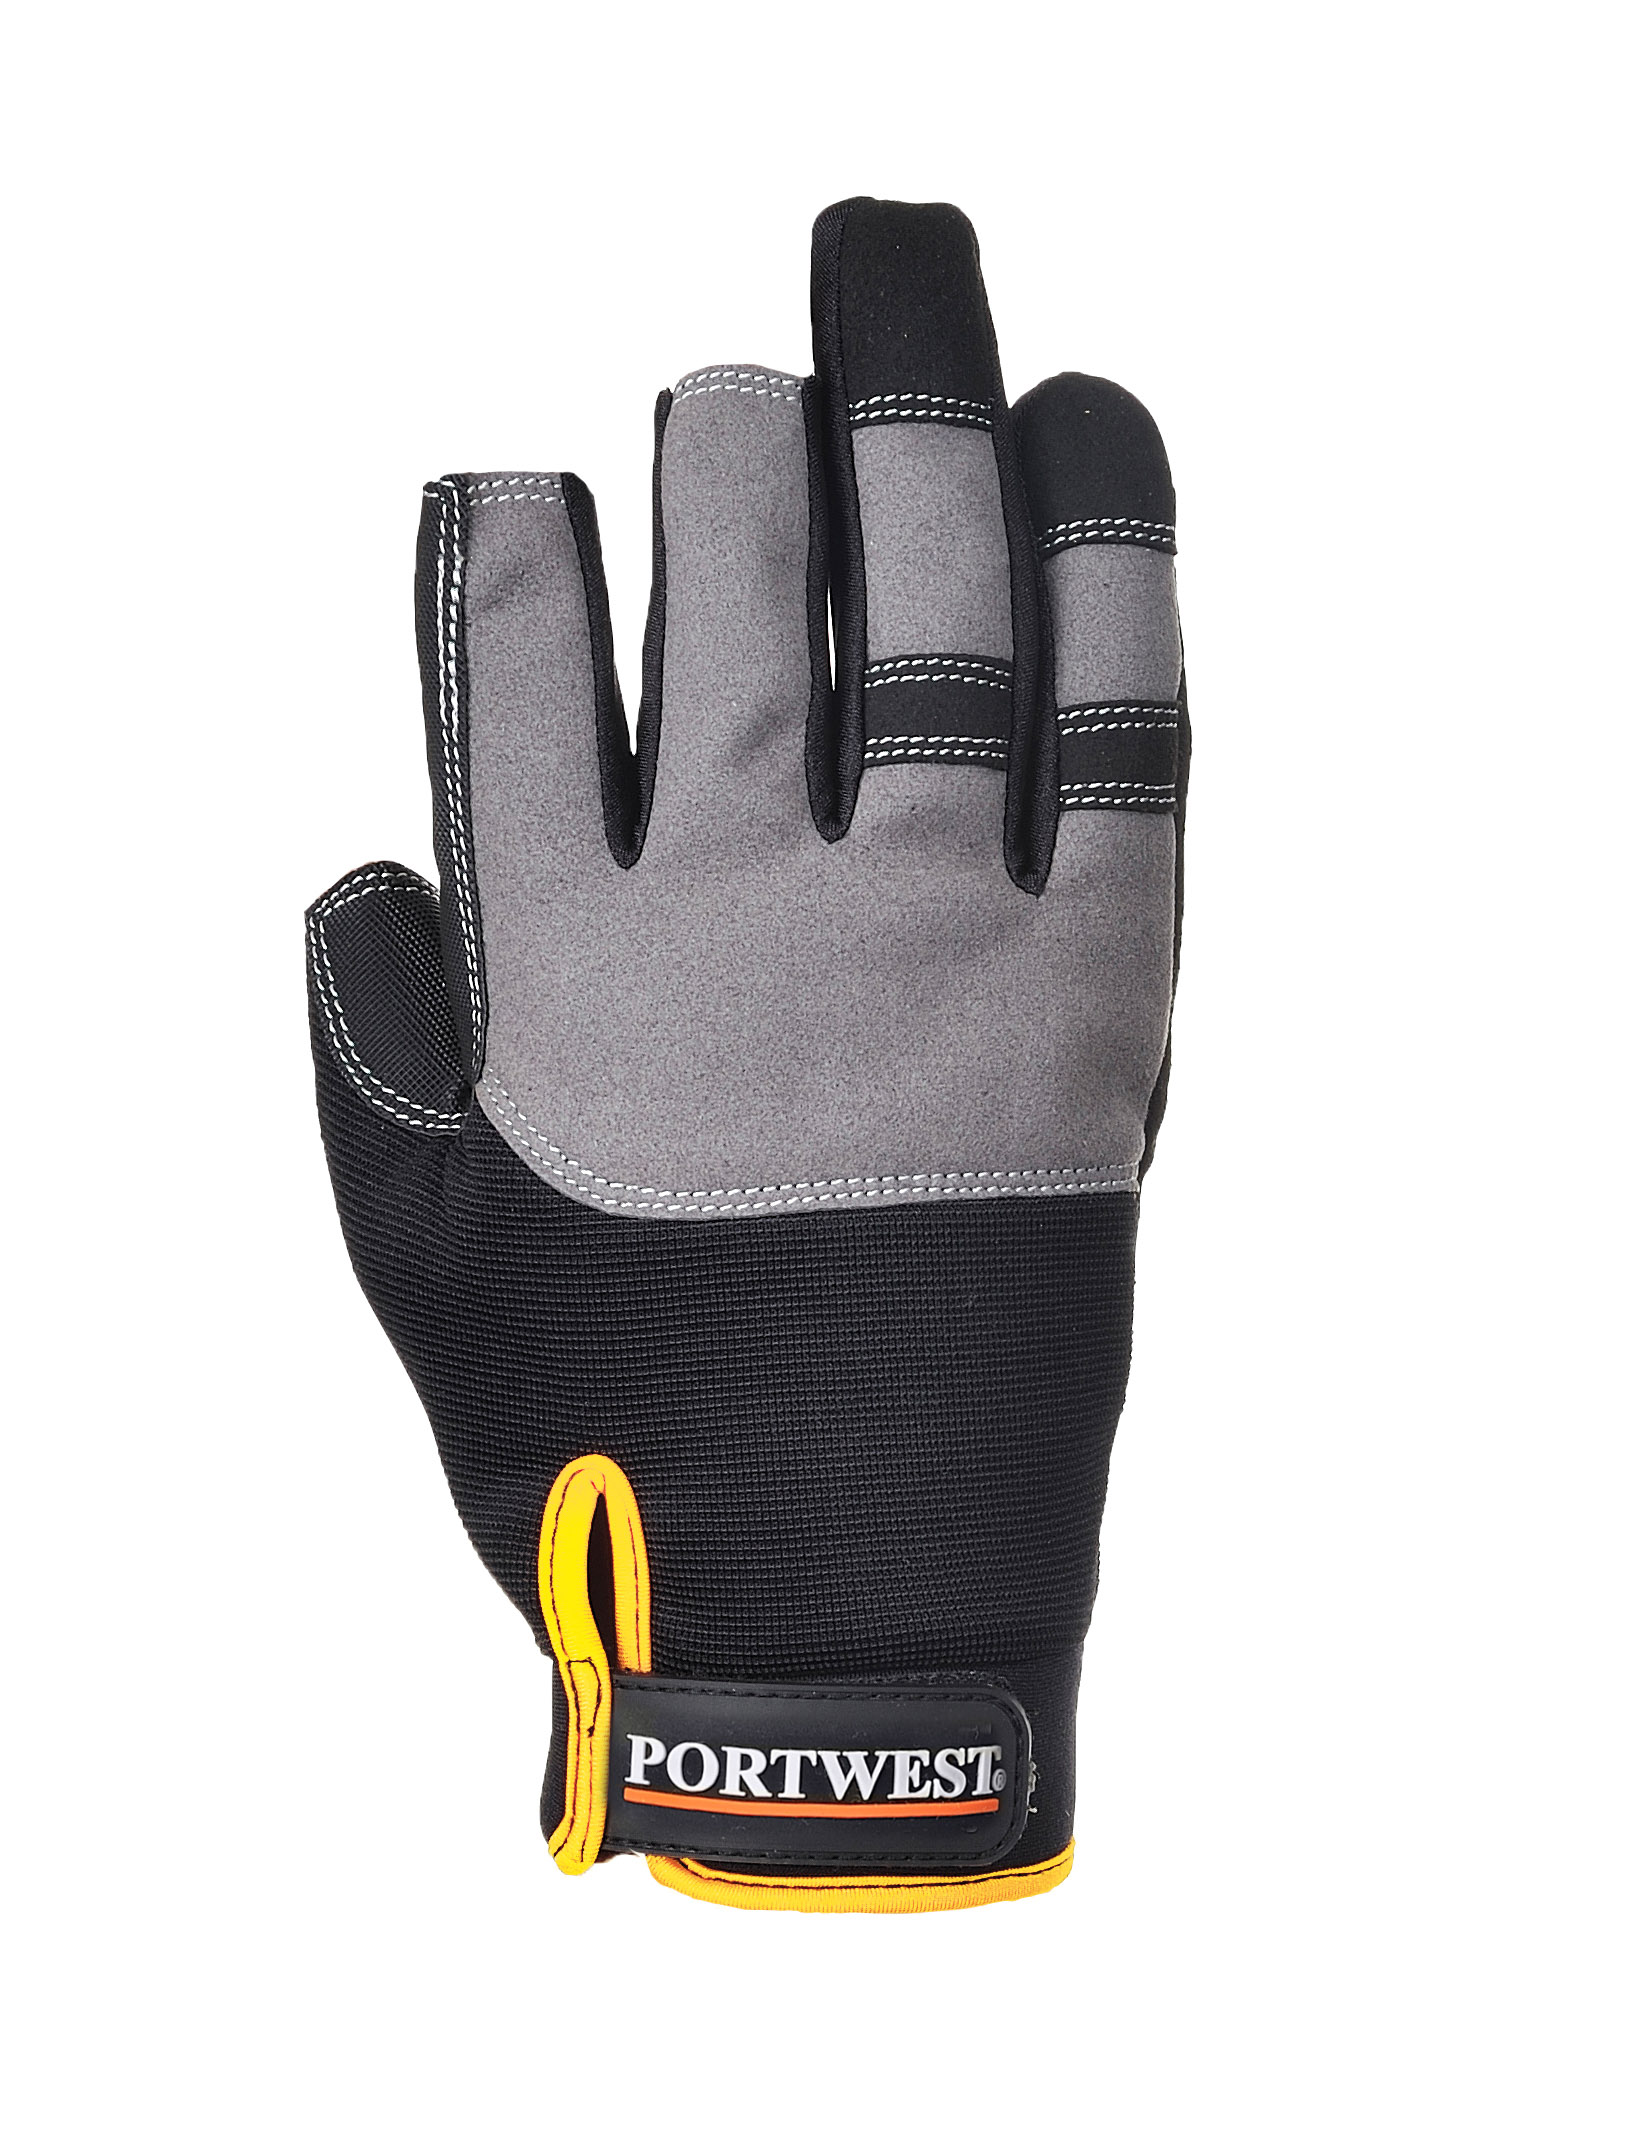 Portwest High Performance Gloves Mechanics Site Engineering Gardening Glove A700